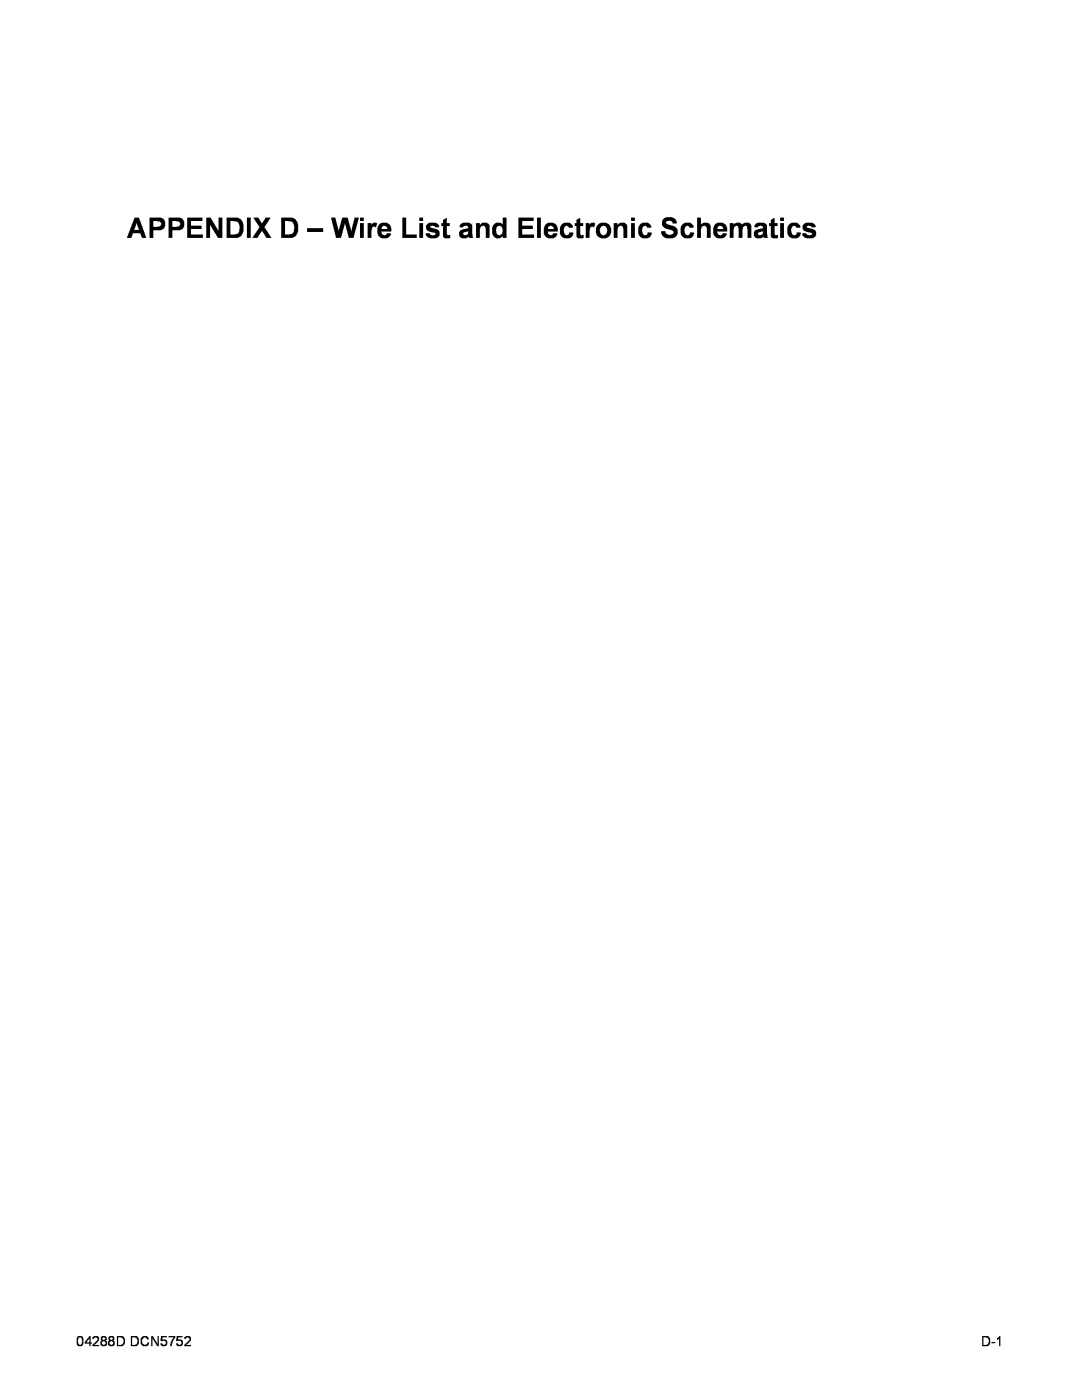 Teledyne M300EM operation manual APPENDIX D – Wire List and Electronic Schematics, 04288D DCN5752 